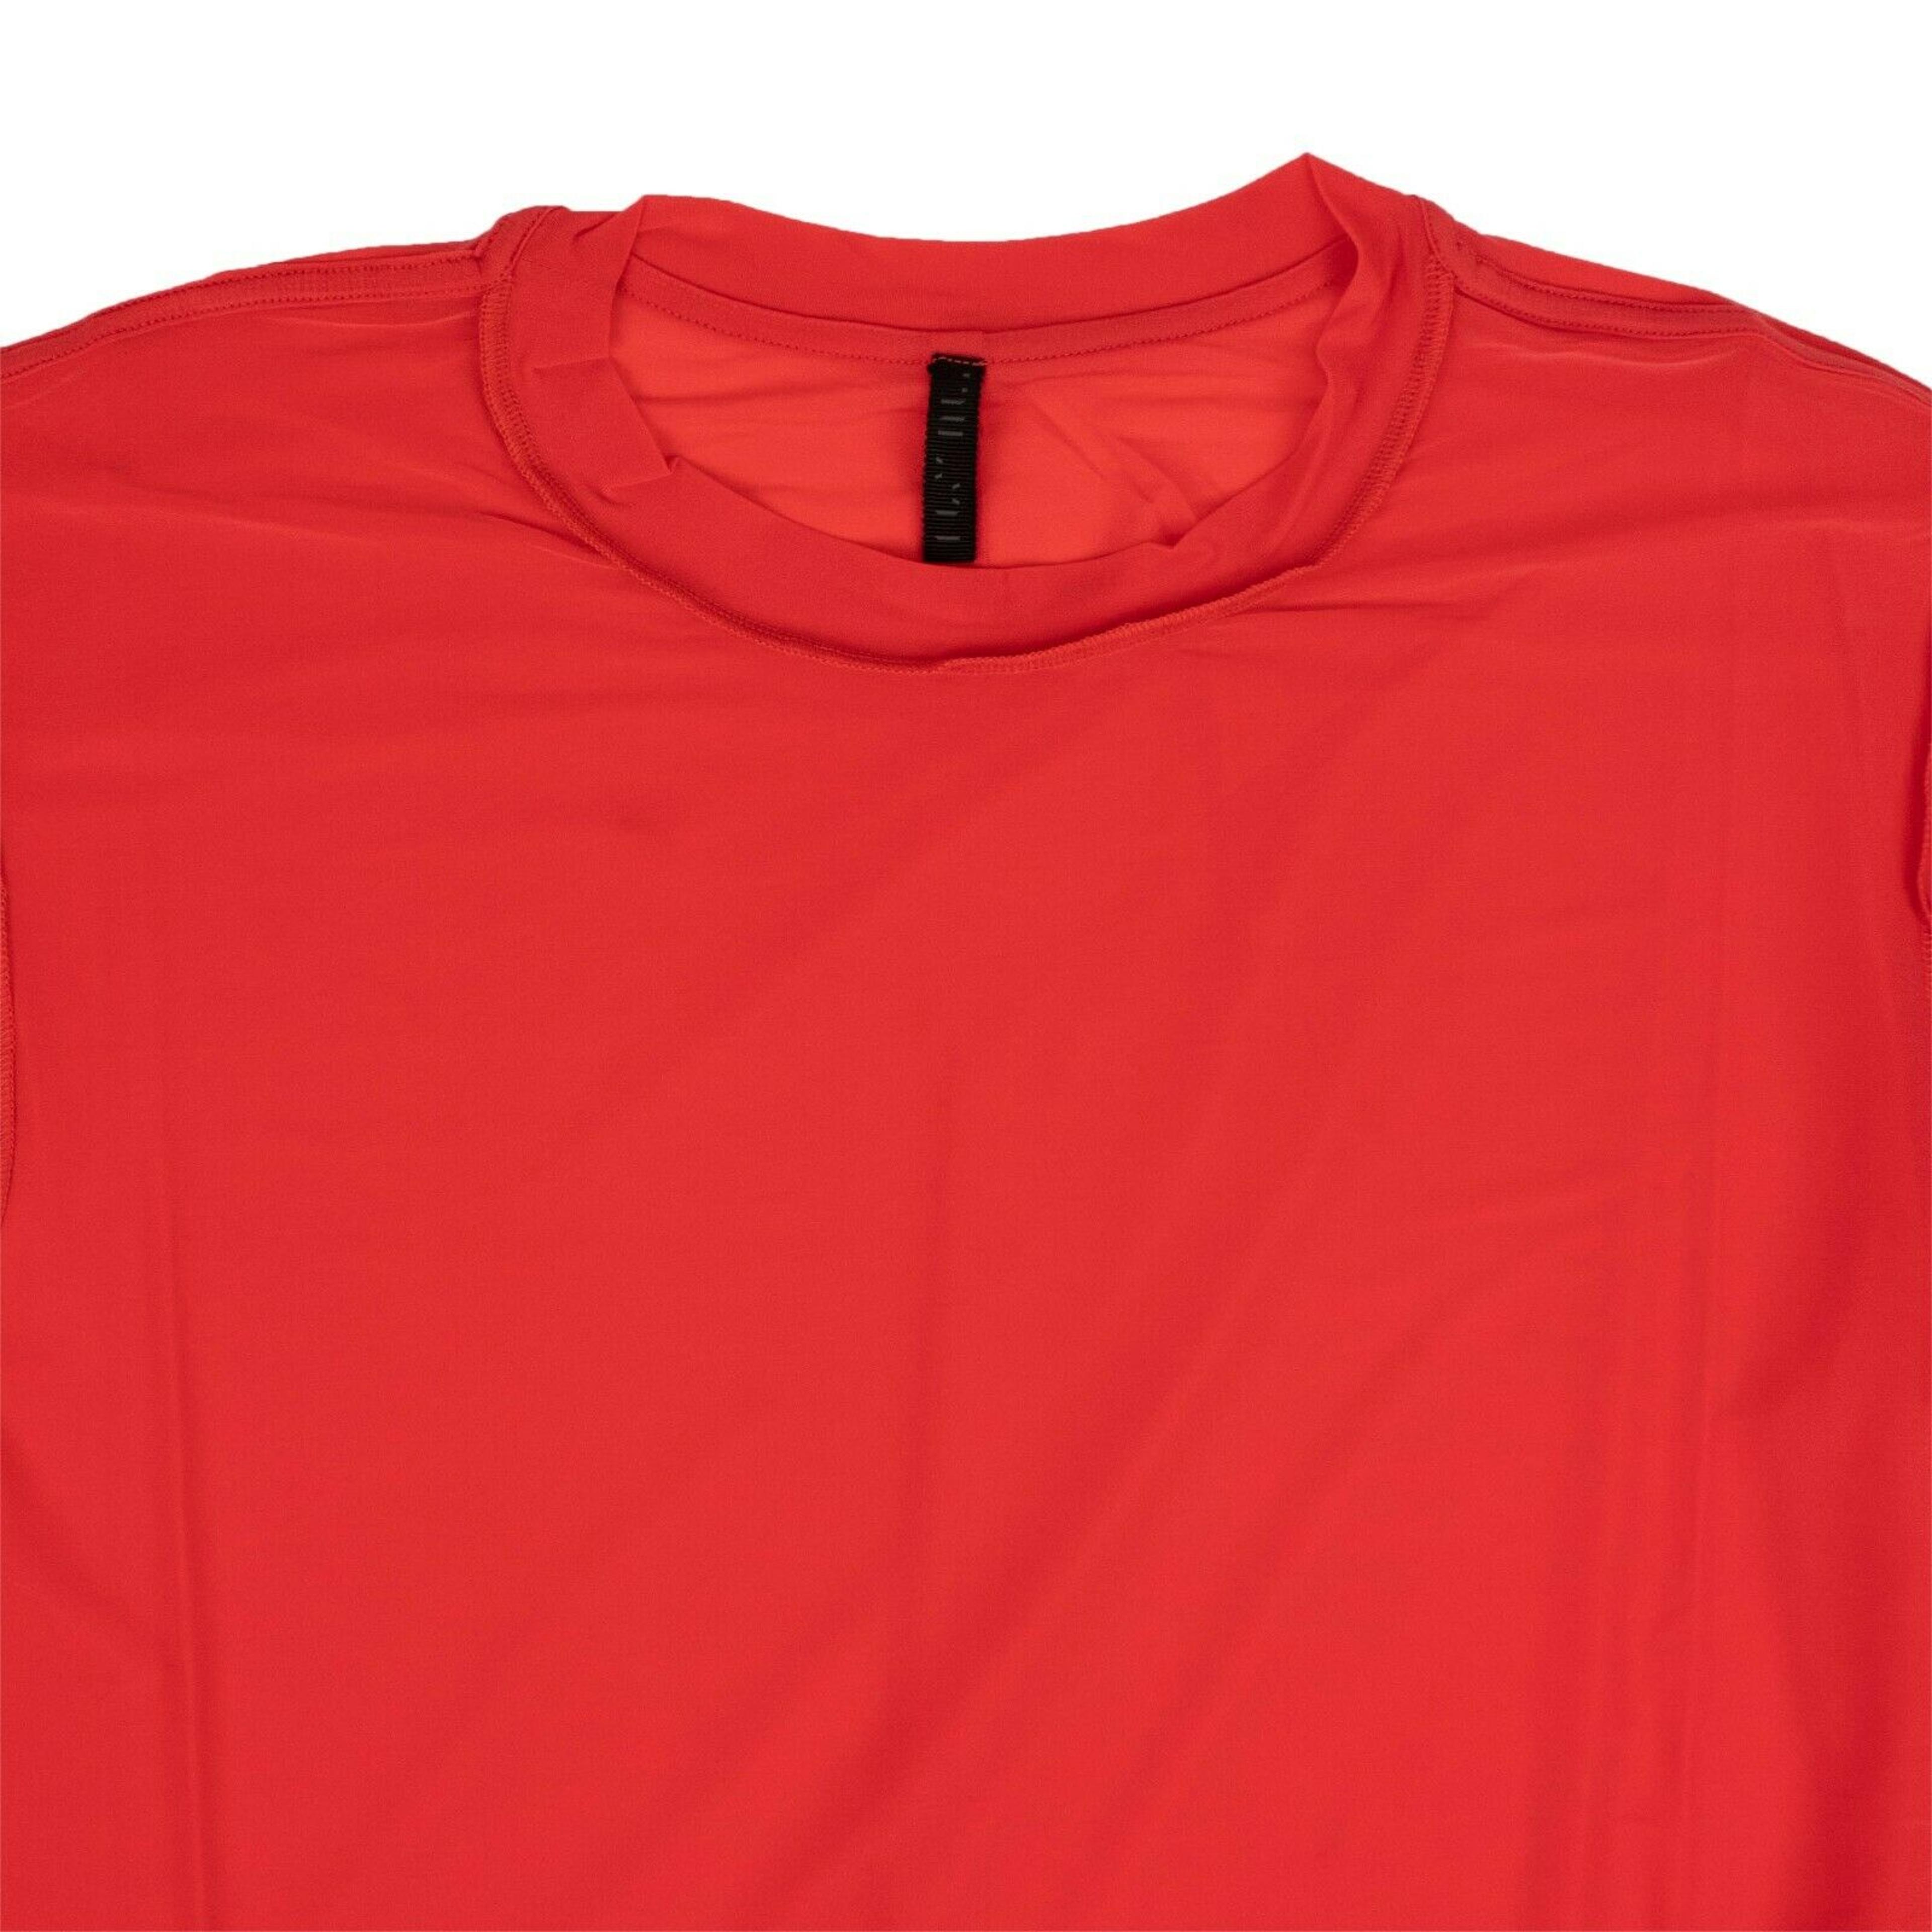 Alternate View 2 of Red Stocking Reverse Skate T-Shirt